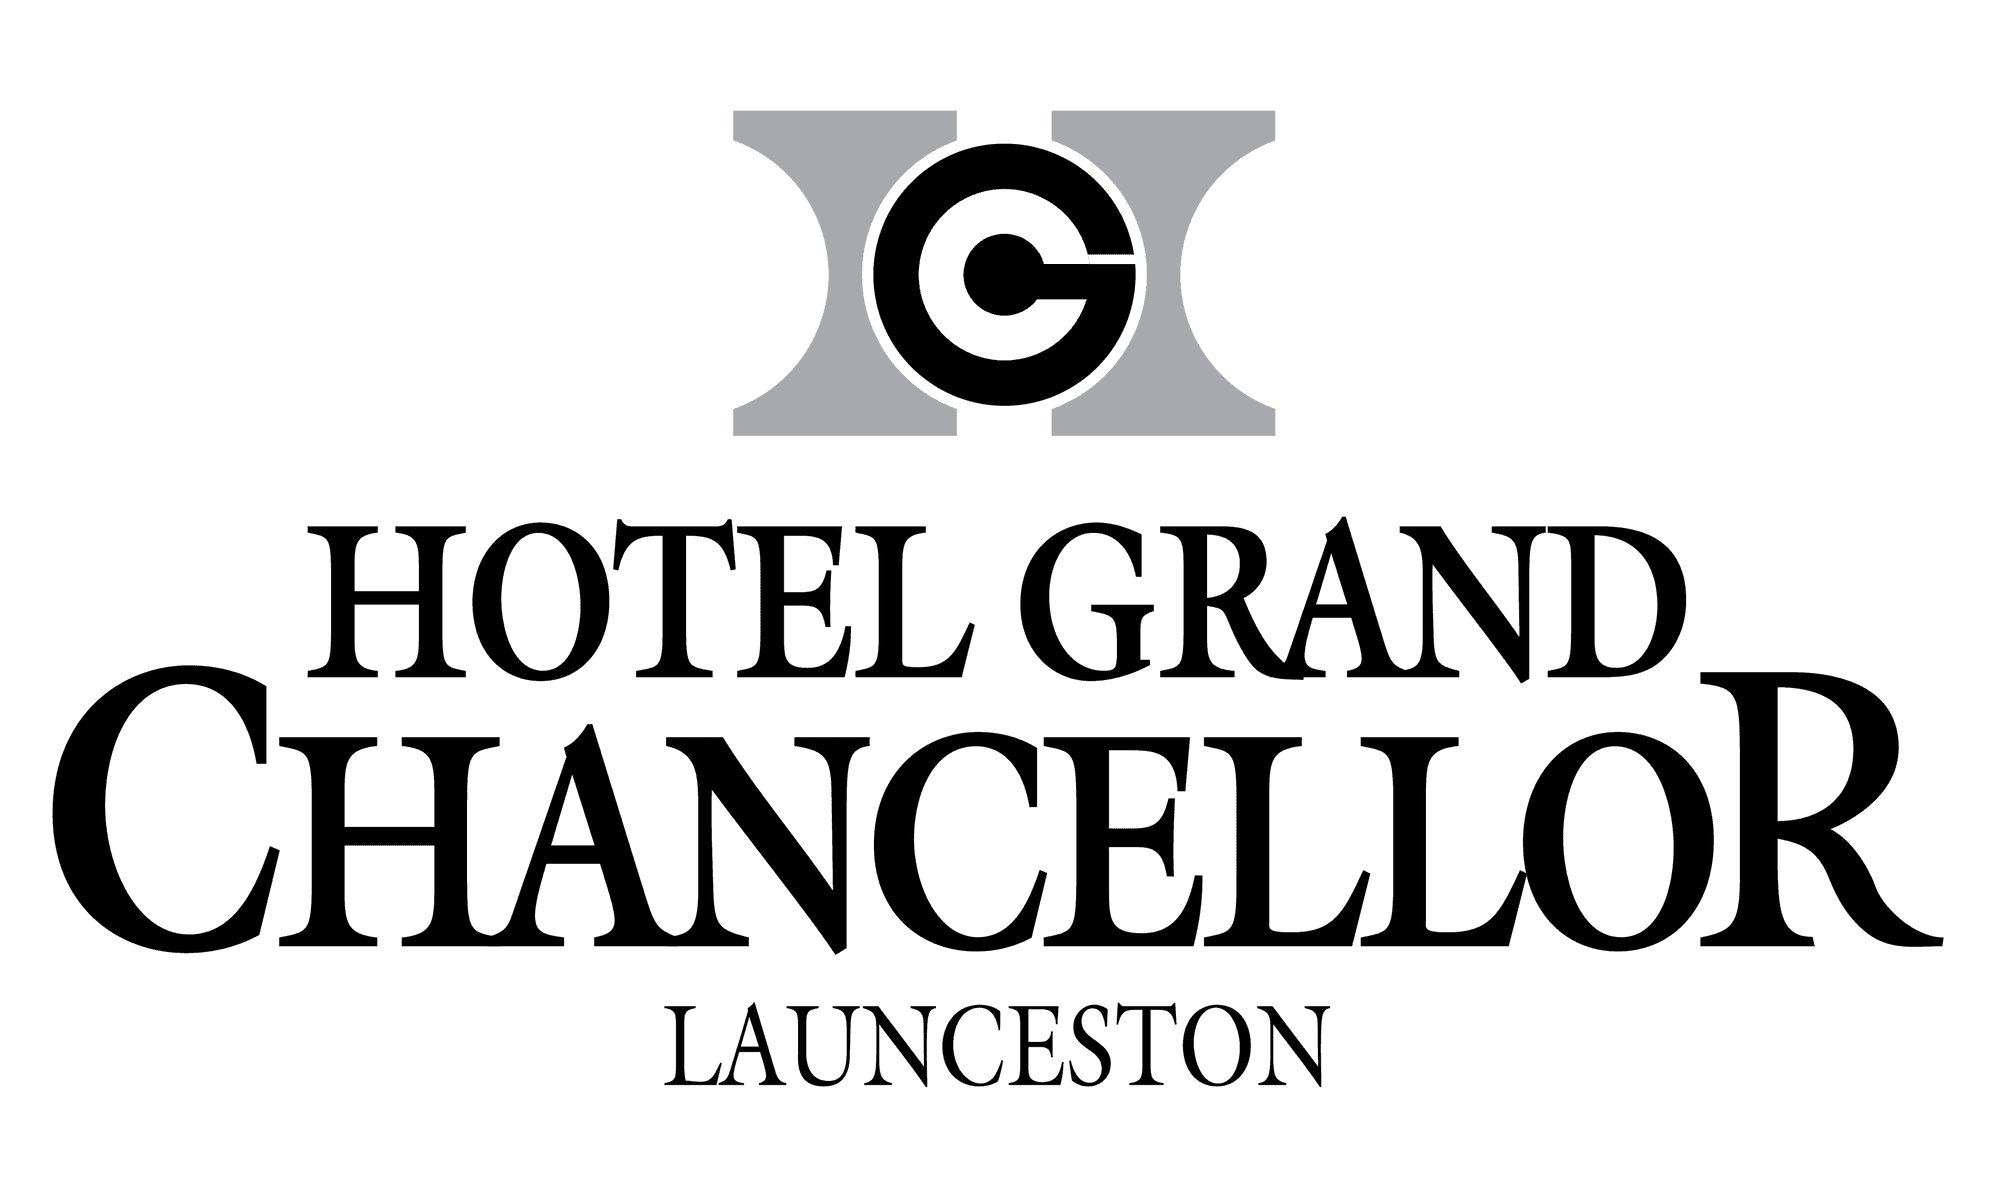 Official logo of Hotel Grand Chancellor Launceston